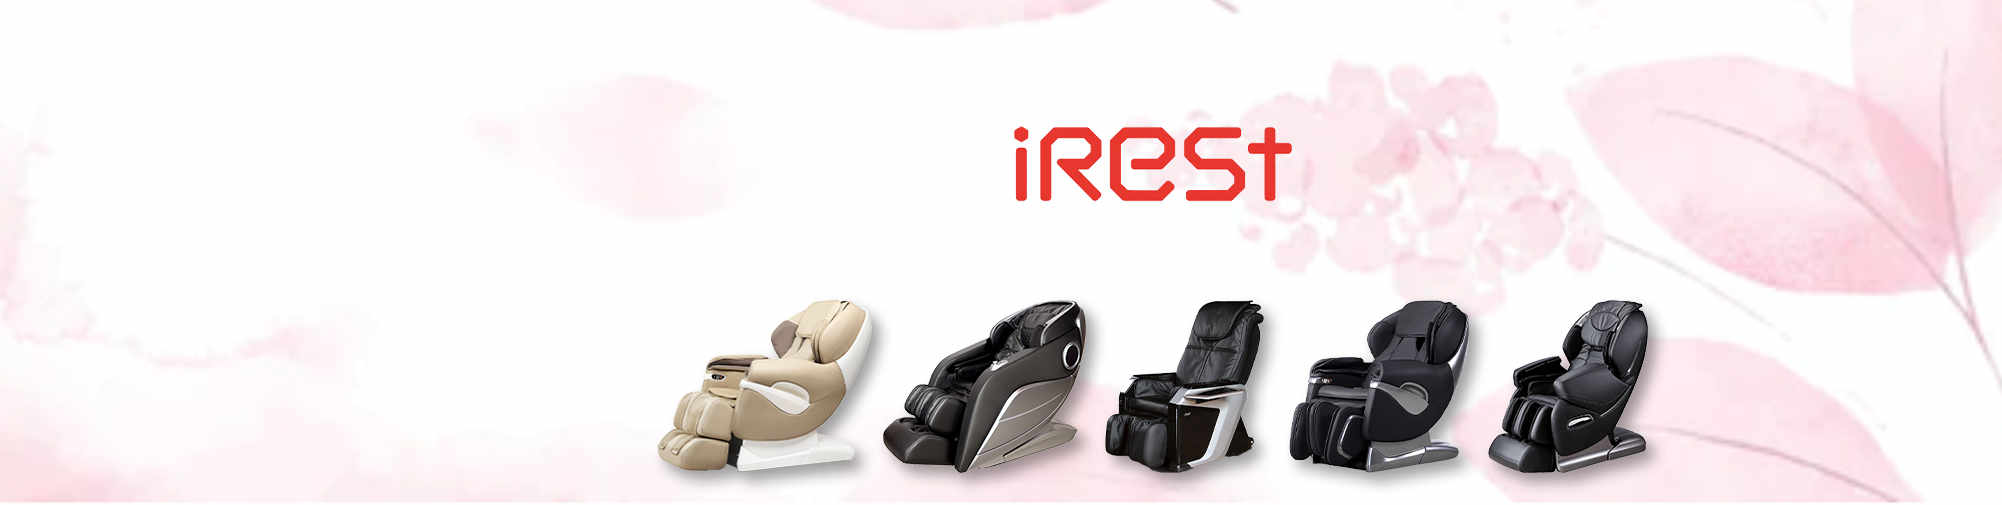 iRest – 마사지 의자 시장을위한 신선한 공기의 숨결 | 마사지 의자 세계